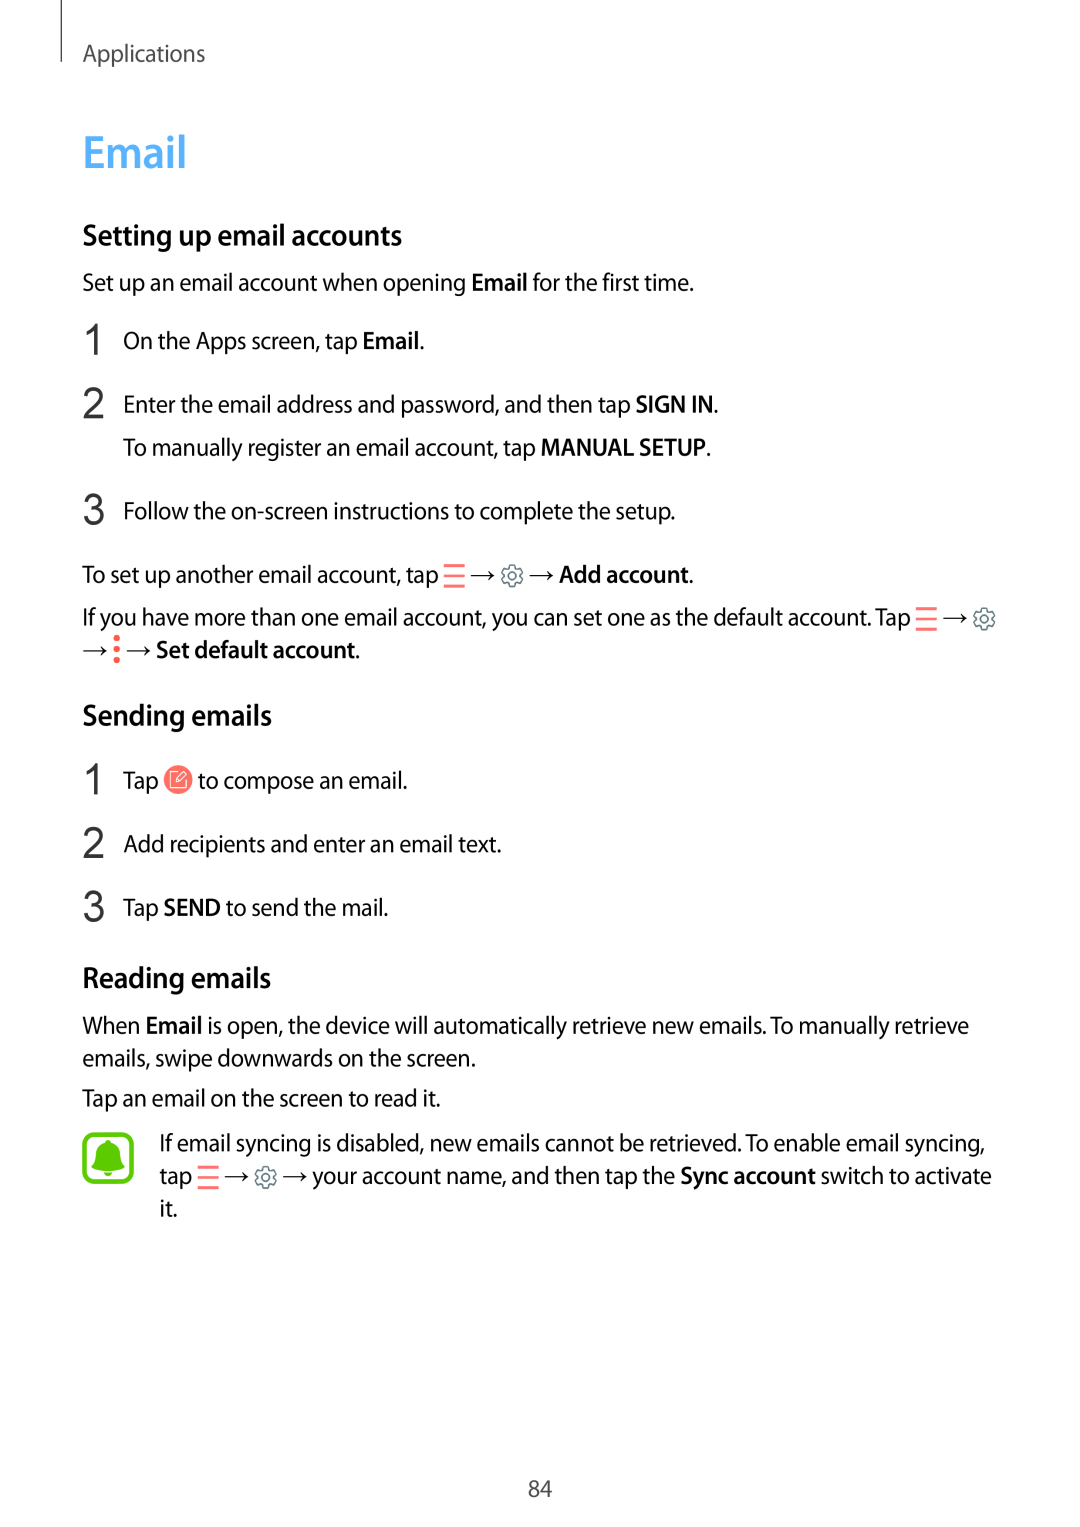 Samsung SM-G928FZDAMTL manual Email, Setting up email accounts, Sending emails, Reading emails, →→Set default account 